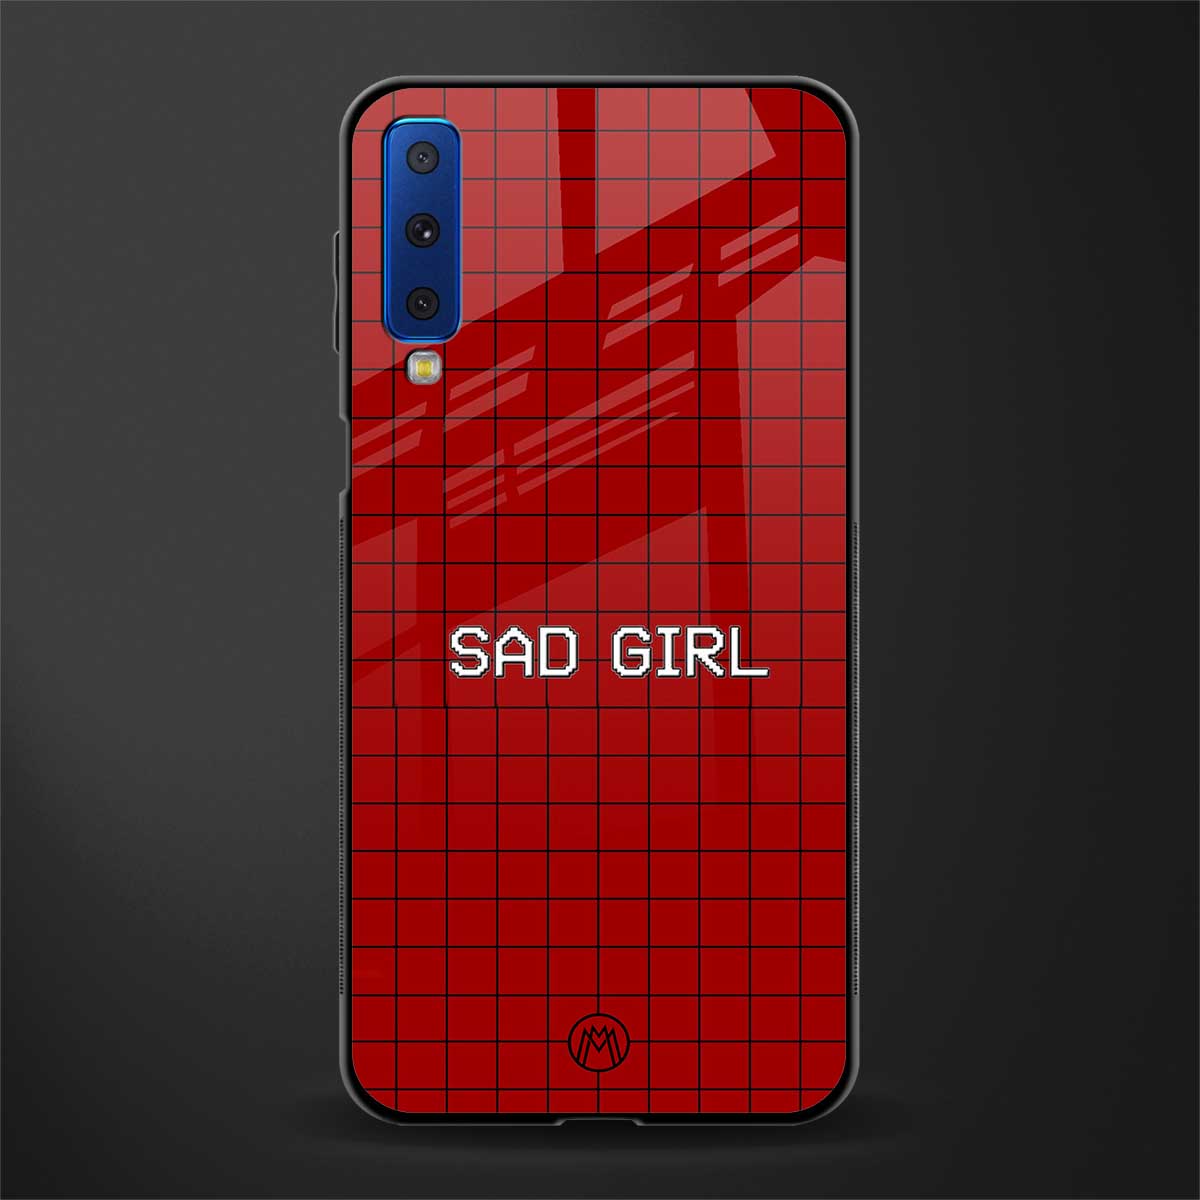 sad girl glass case for samsung galaxy a7 2018 image